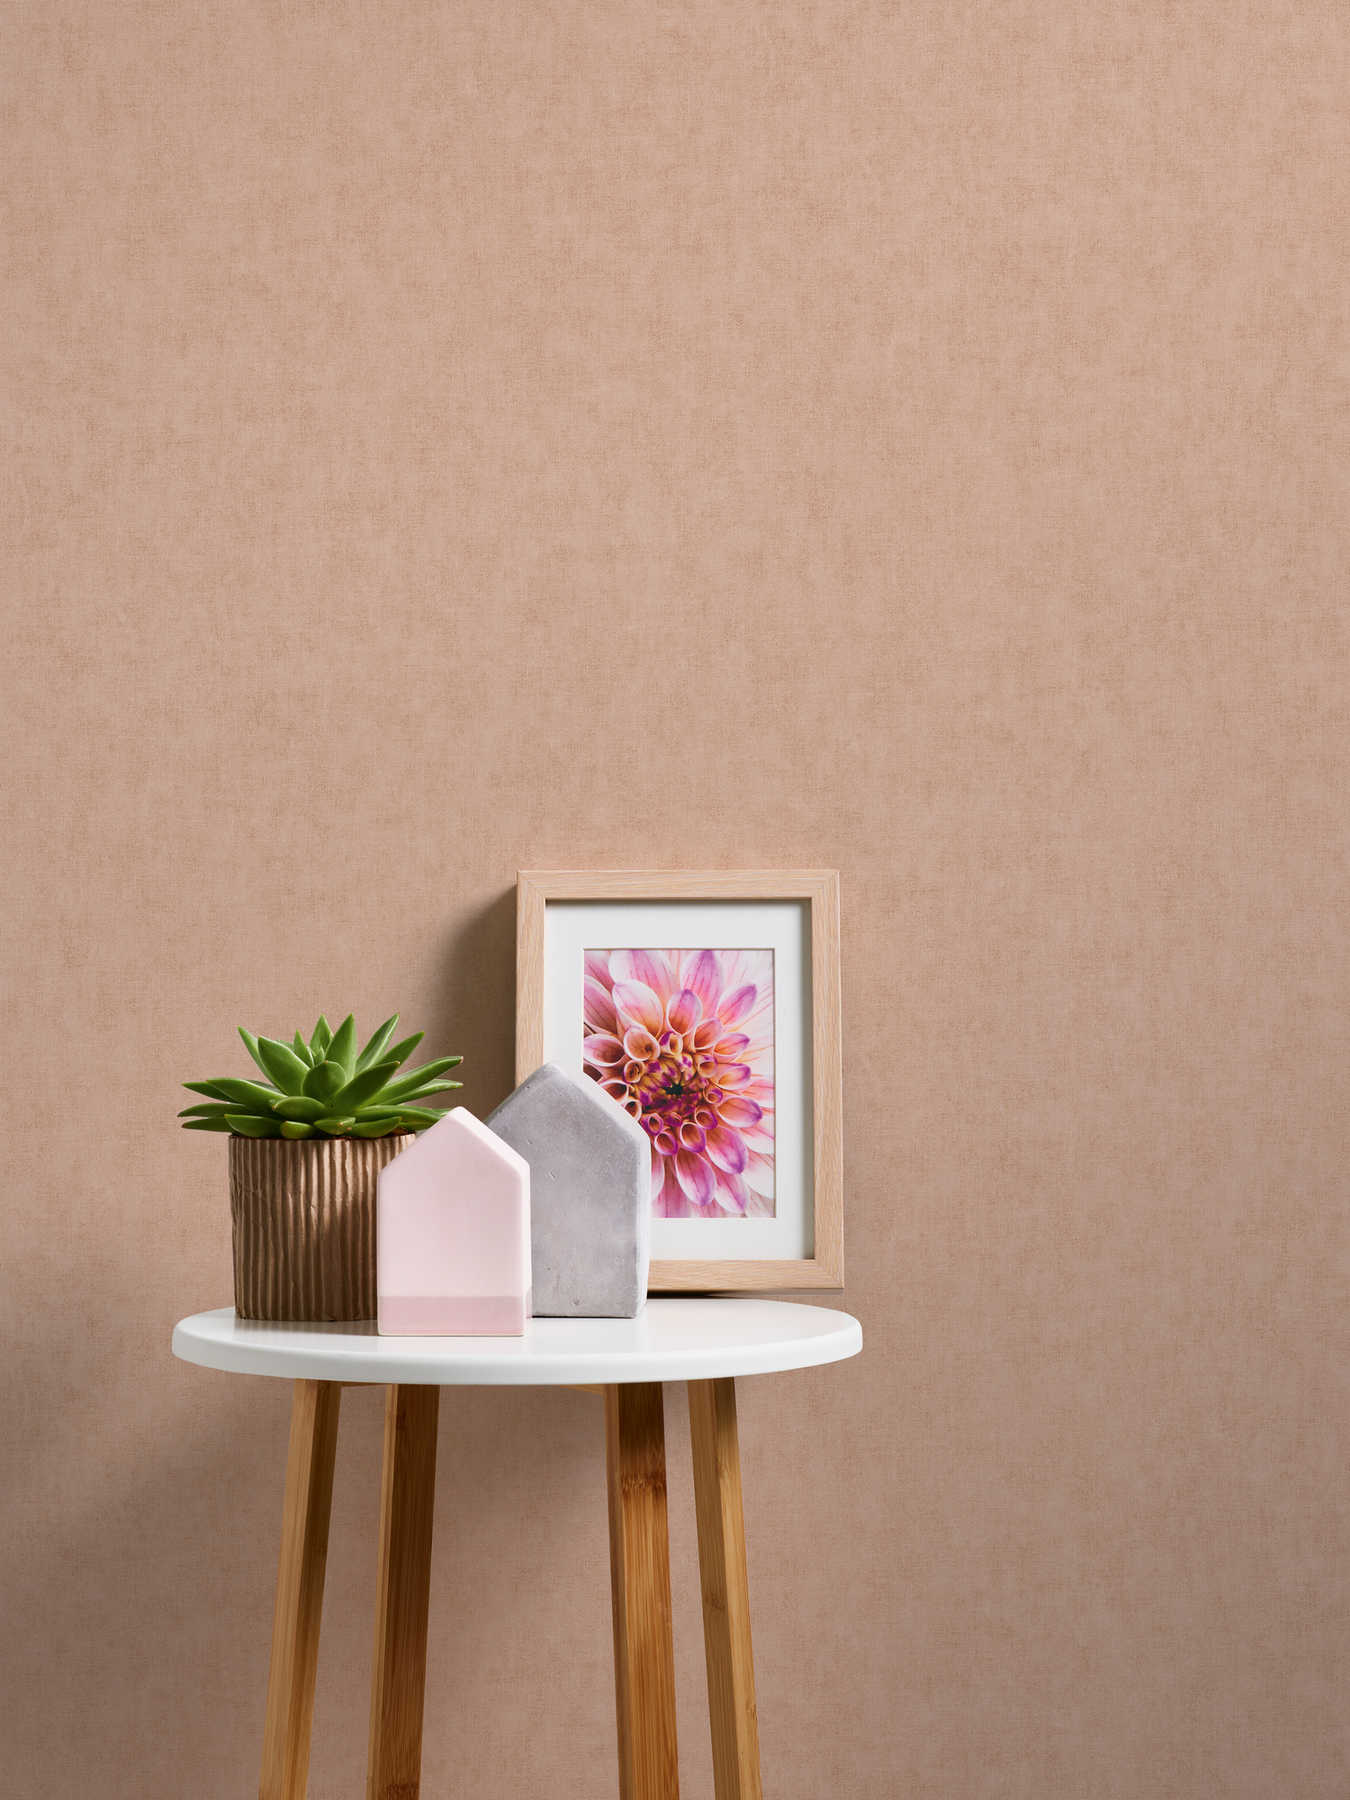             Wallpaper plain, linen look & Scandinavian style - pink, orange
        